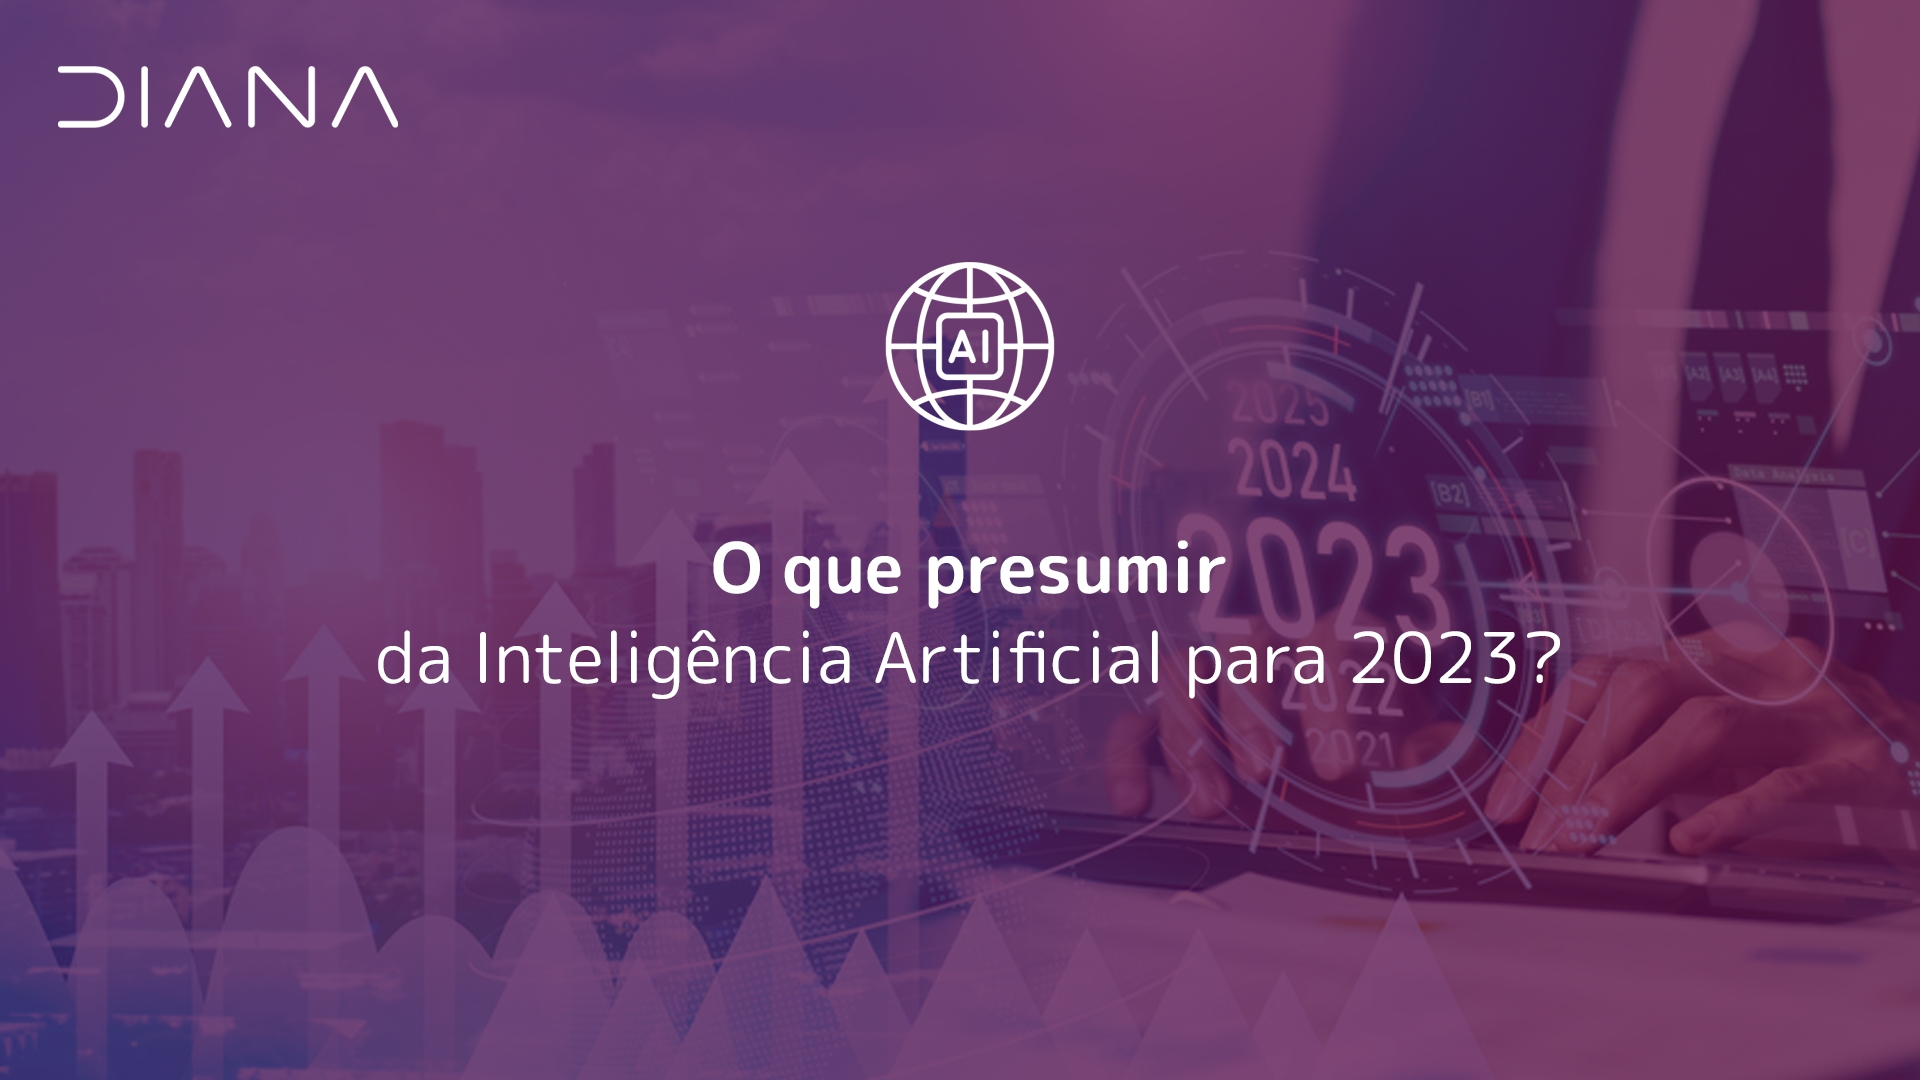 O que presumir da Inteligência Artificial para 2023?